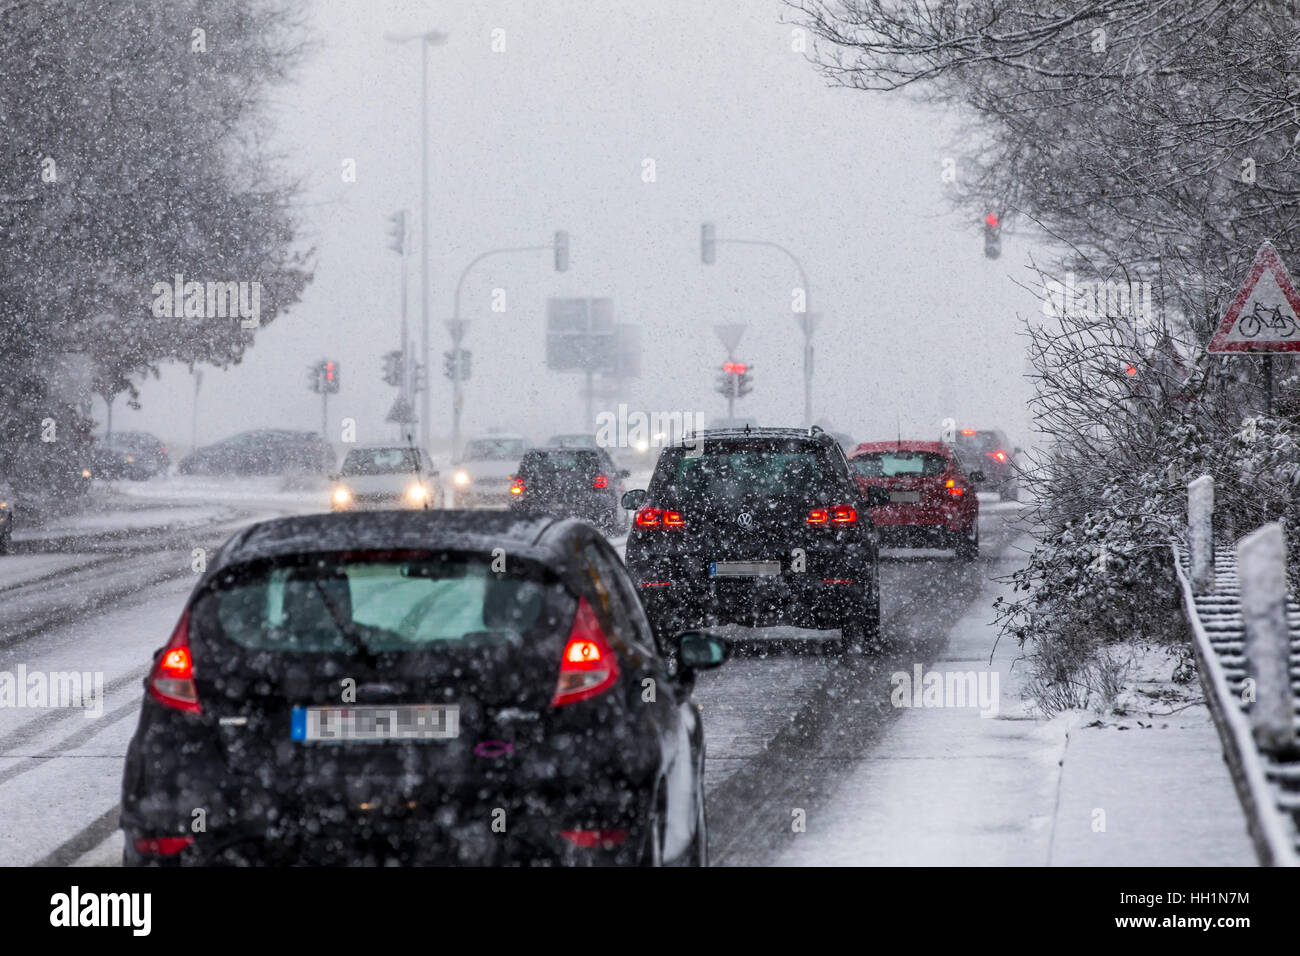 Winter, heavy snowfall, traffic on an inner-city street in Essen, Germany Stock Photo